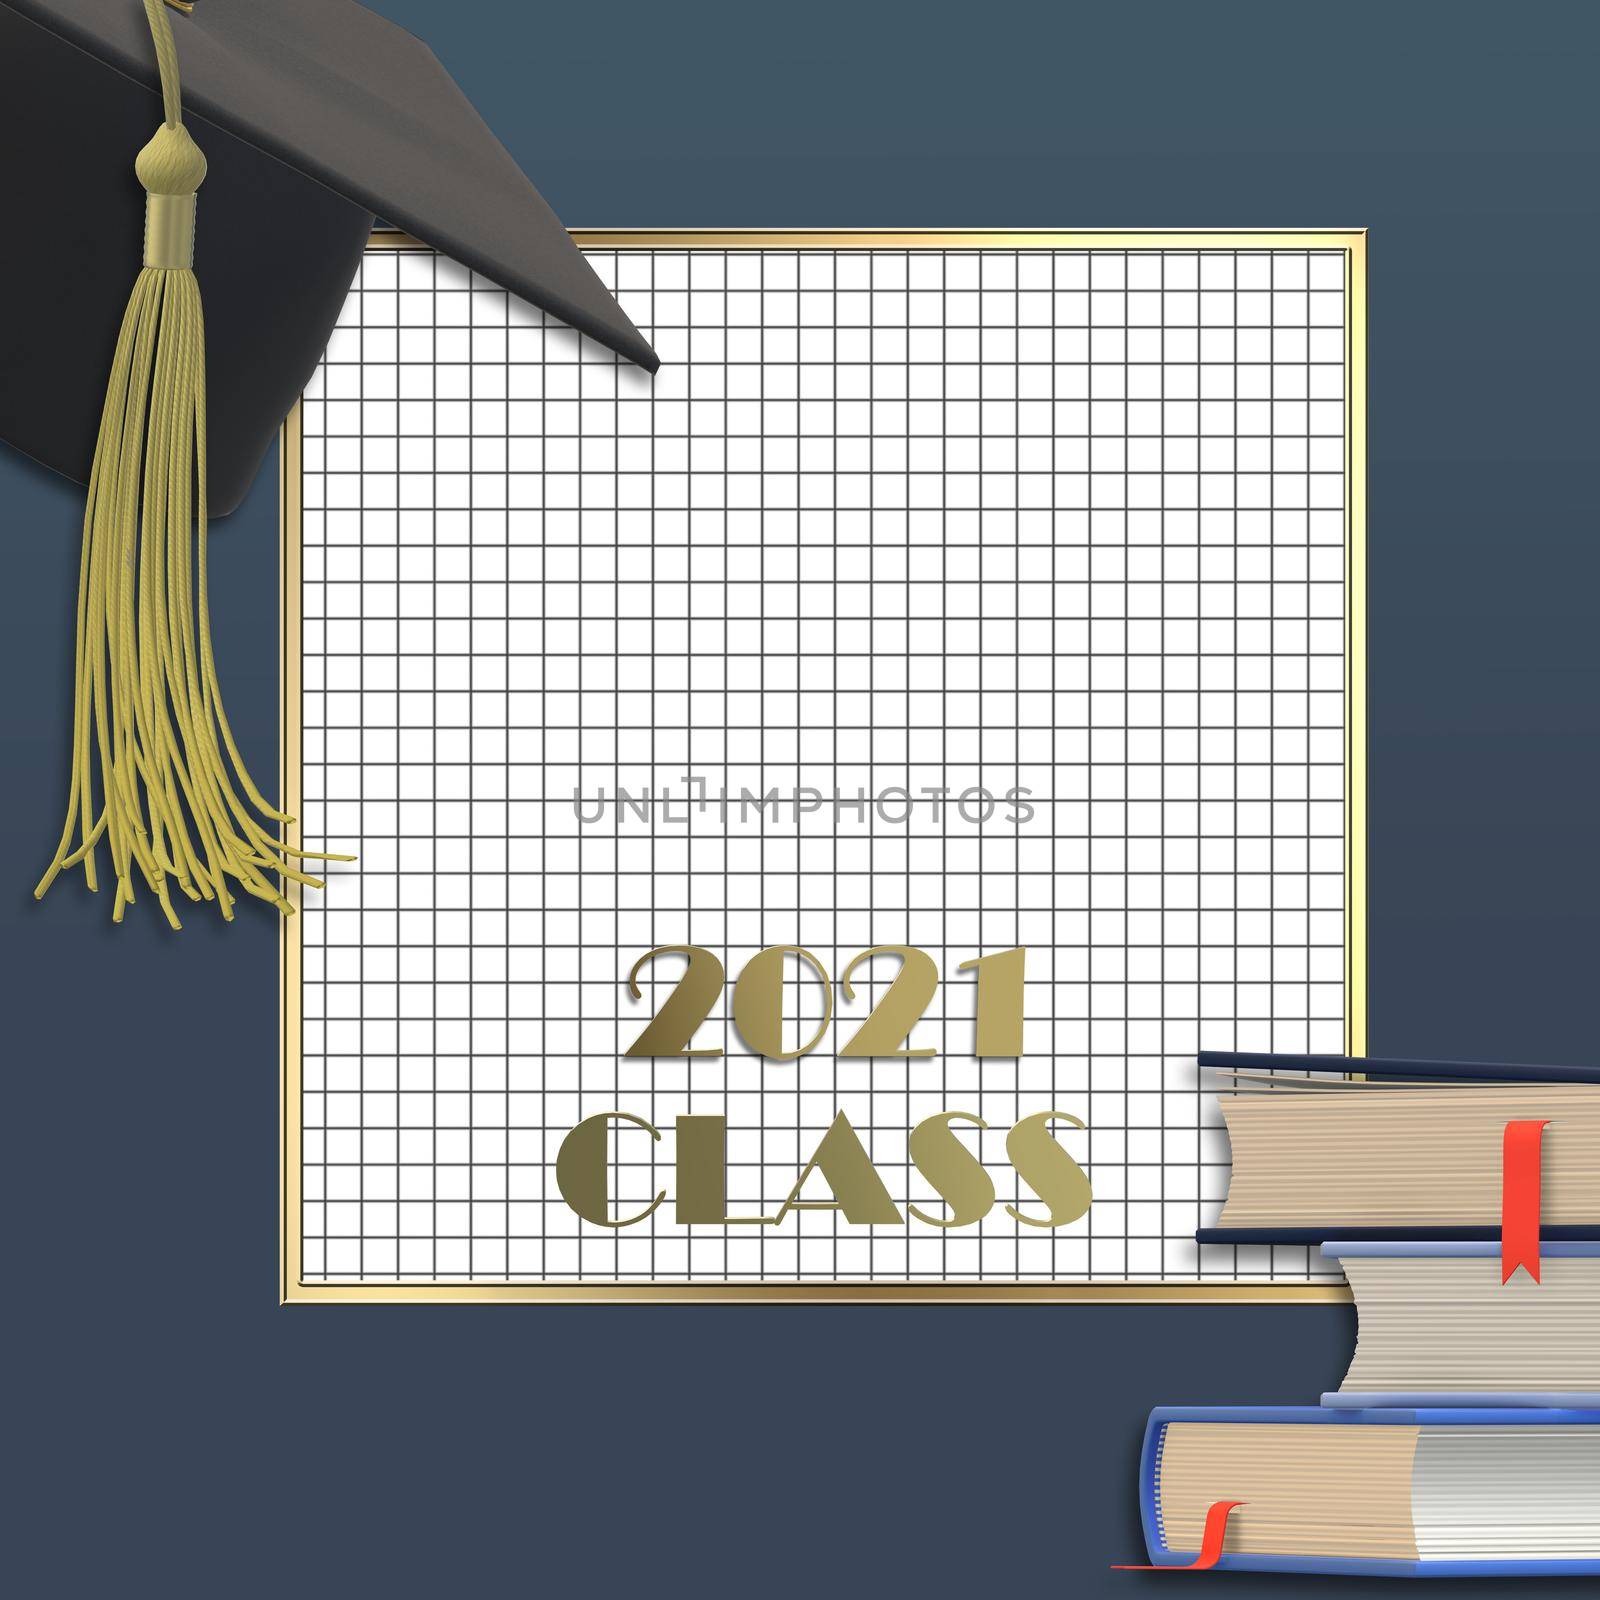 Graduation 2021 card with cap by NelliPolk